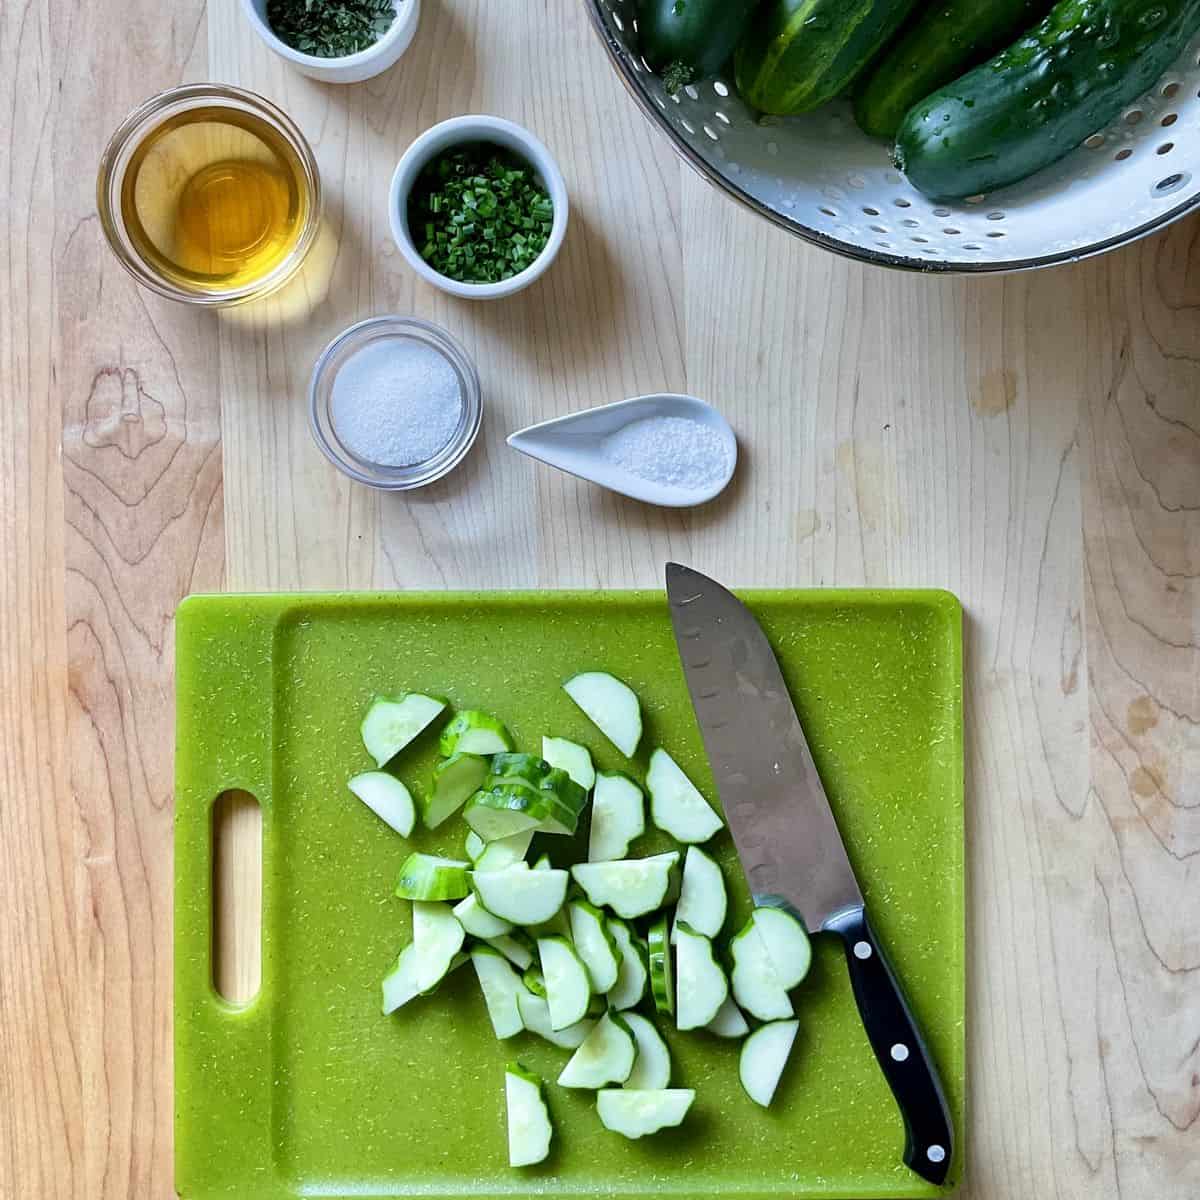 Sliced cucumbers on a cutting board.